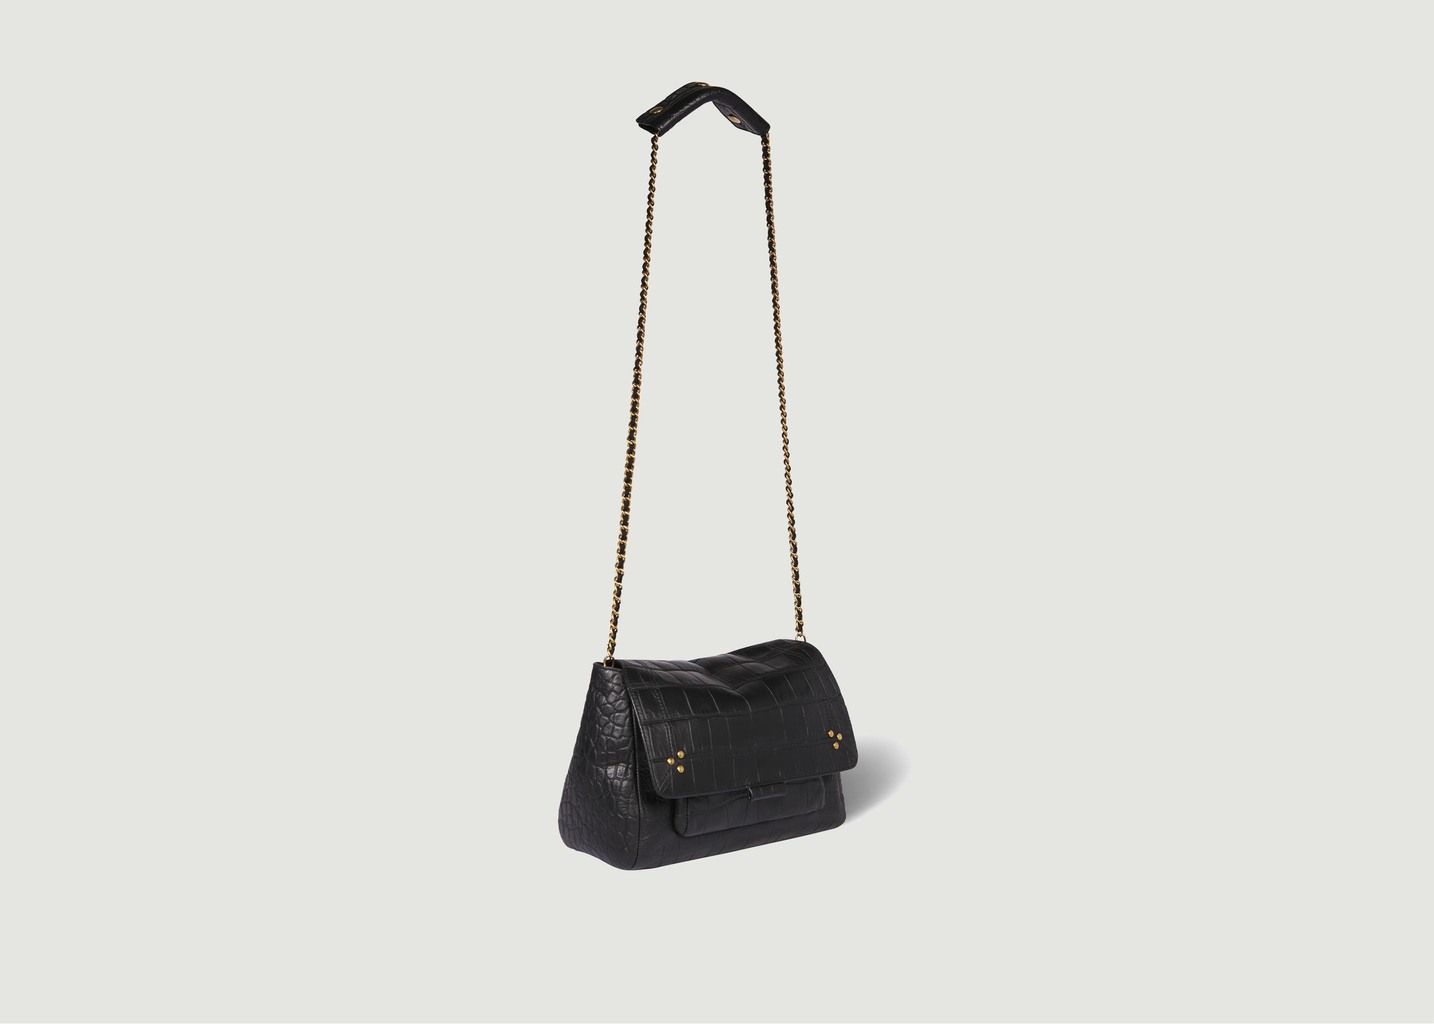 Lulu M leather bag - Jérôme Dreyfuss